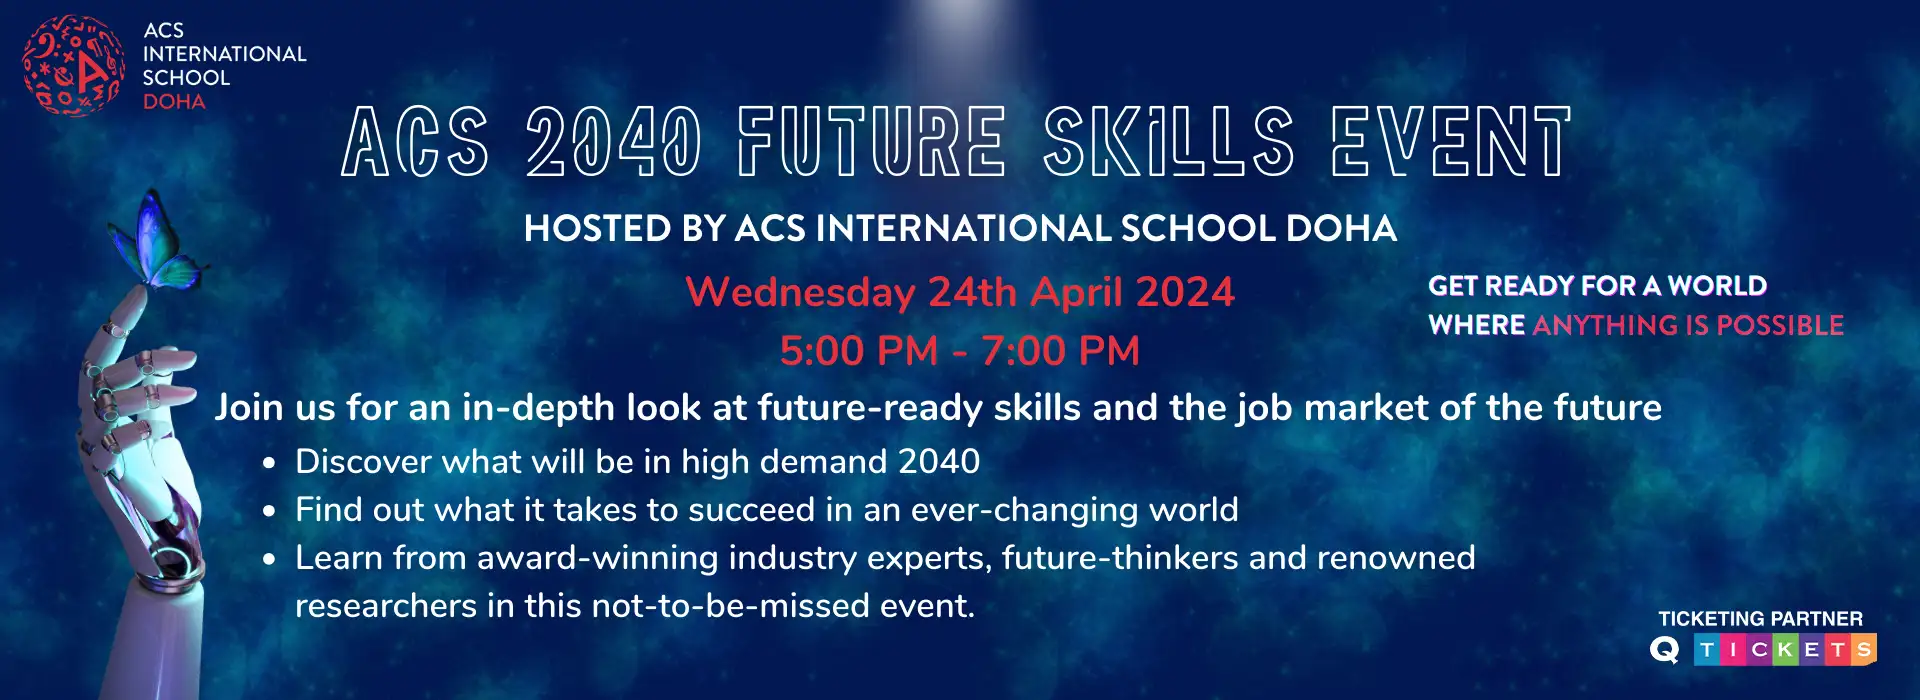 Future skills 2040